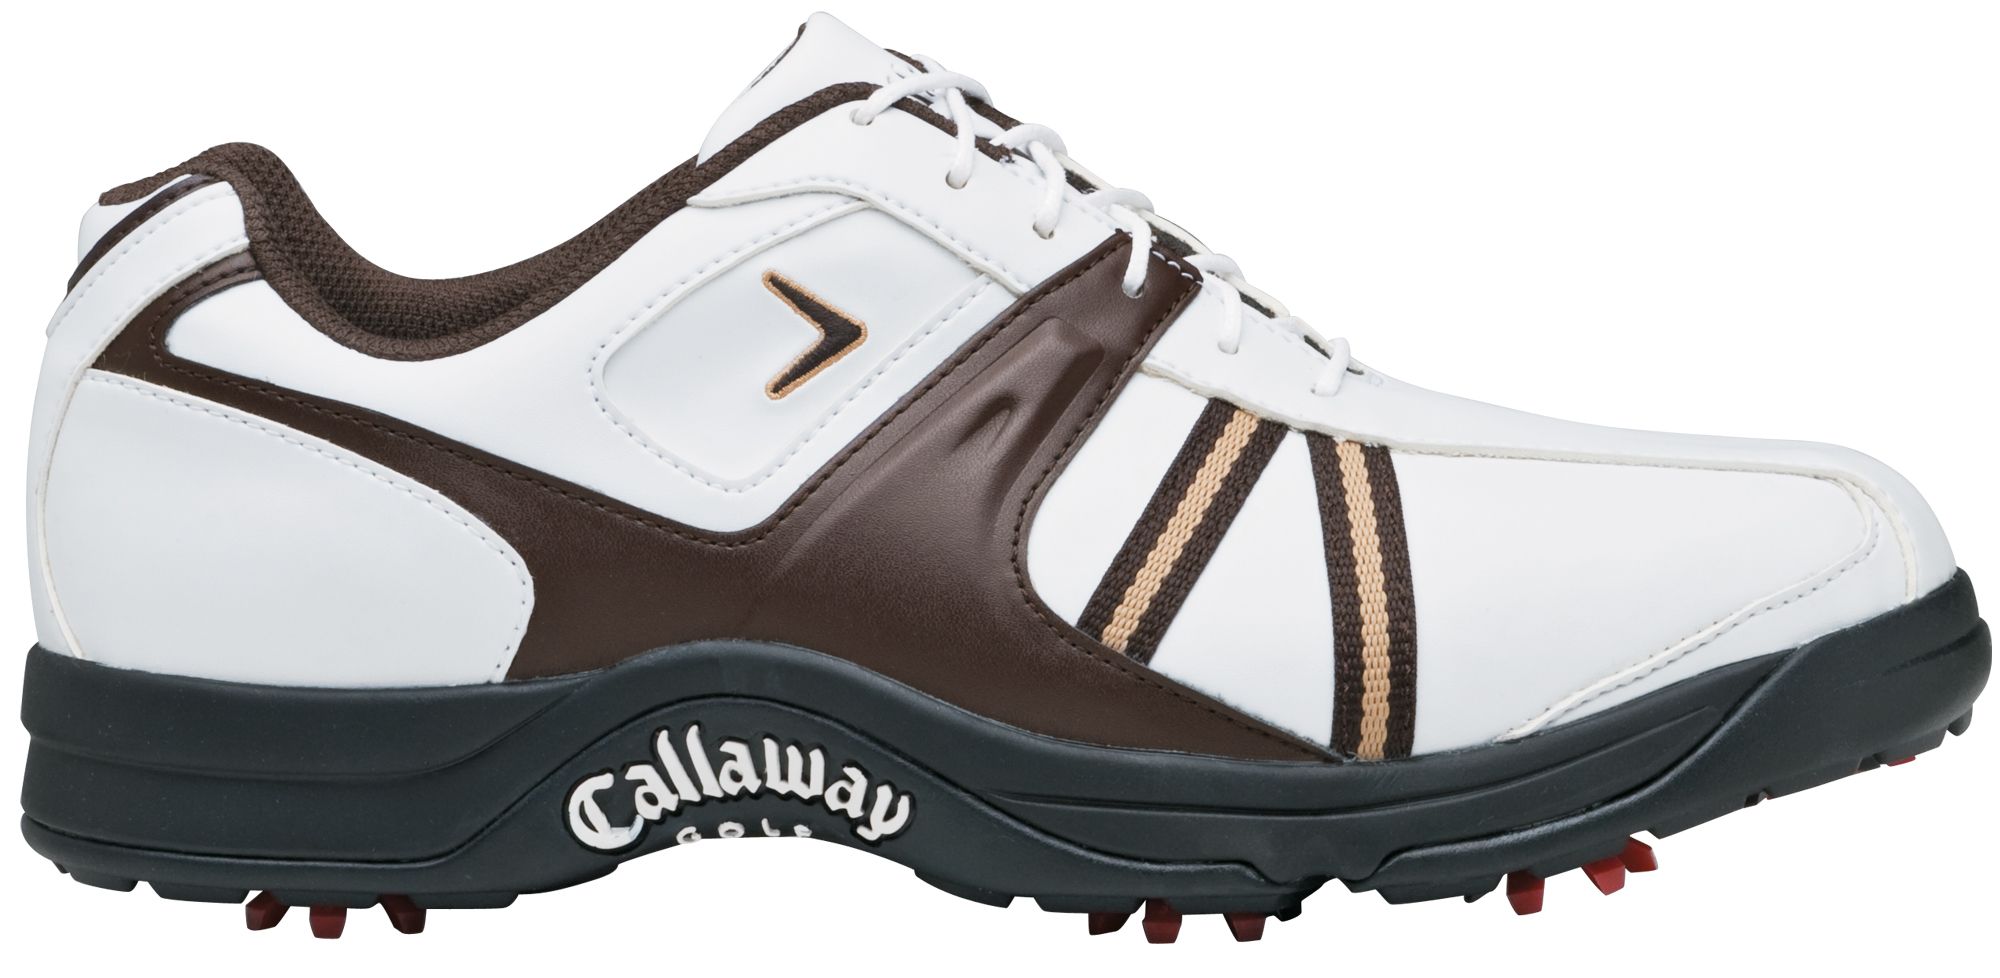 Mens Callaway Golf Shoes - Callaway Mens Golf Shoes for Sale at ...